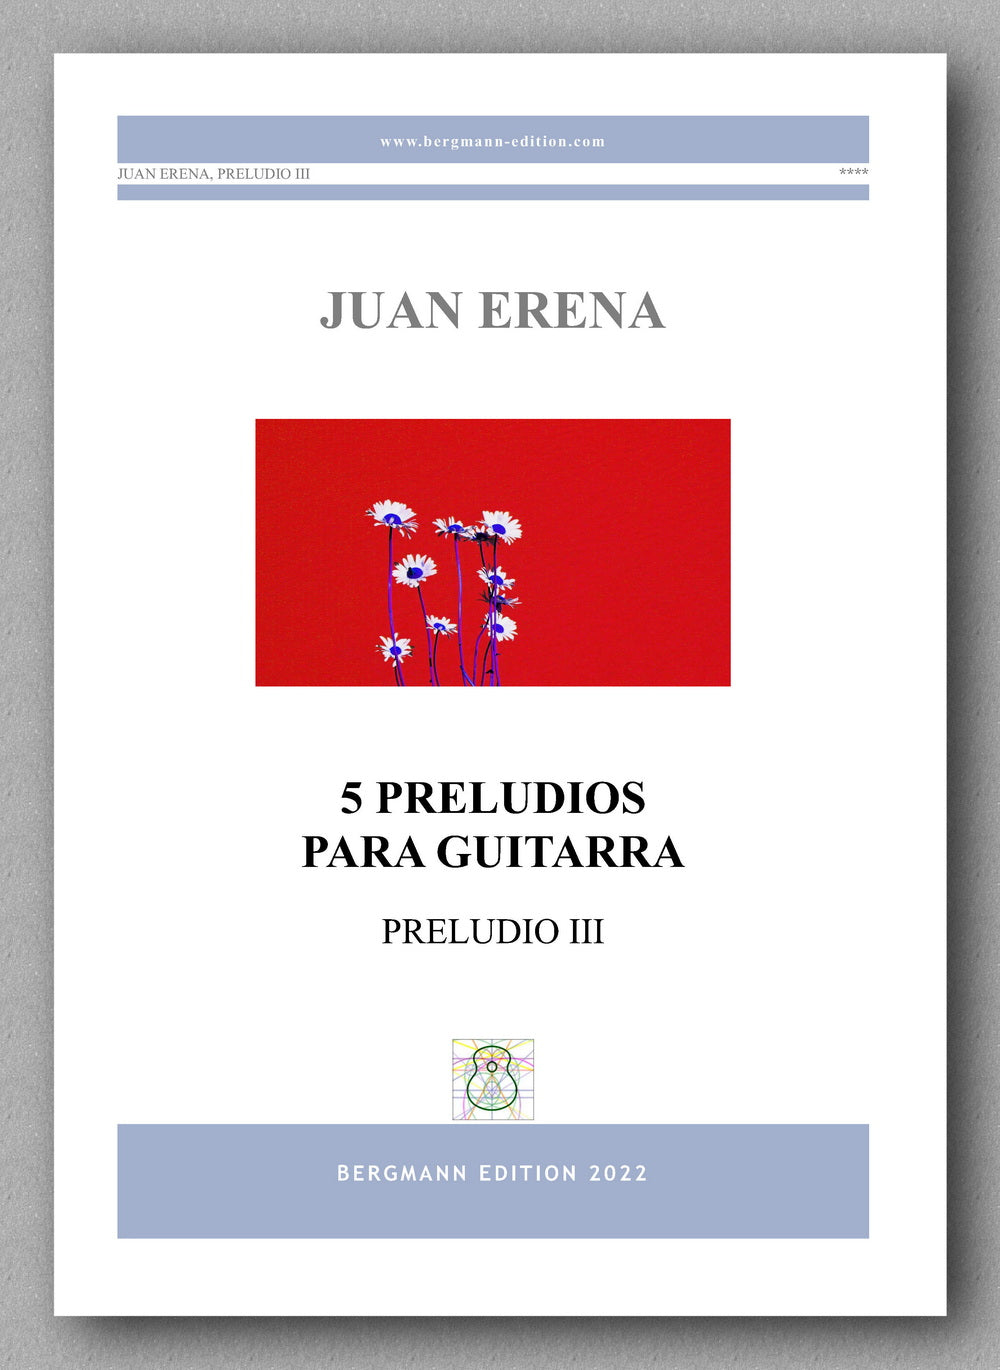 Juan Erena, PRELUDIO III - preview of the cover